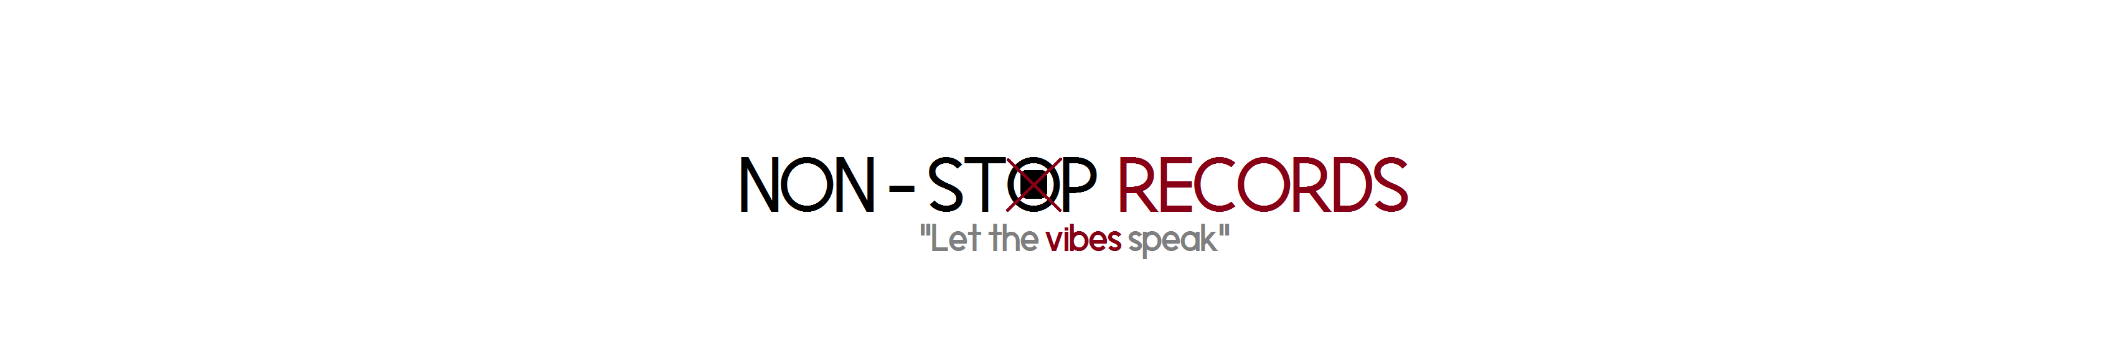 Non - Stop Records